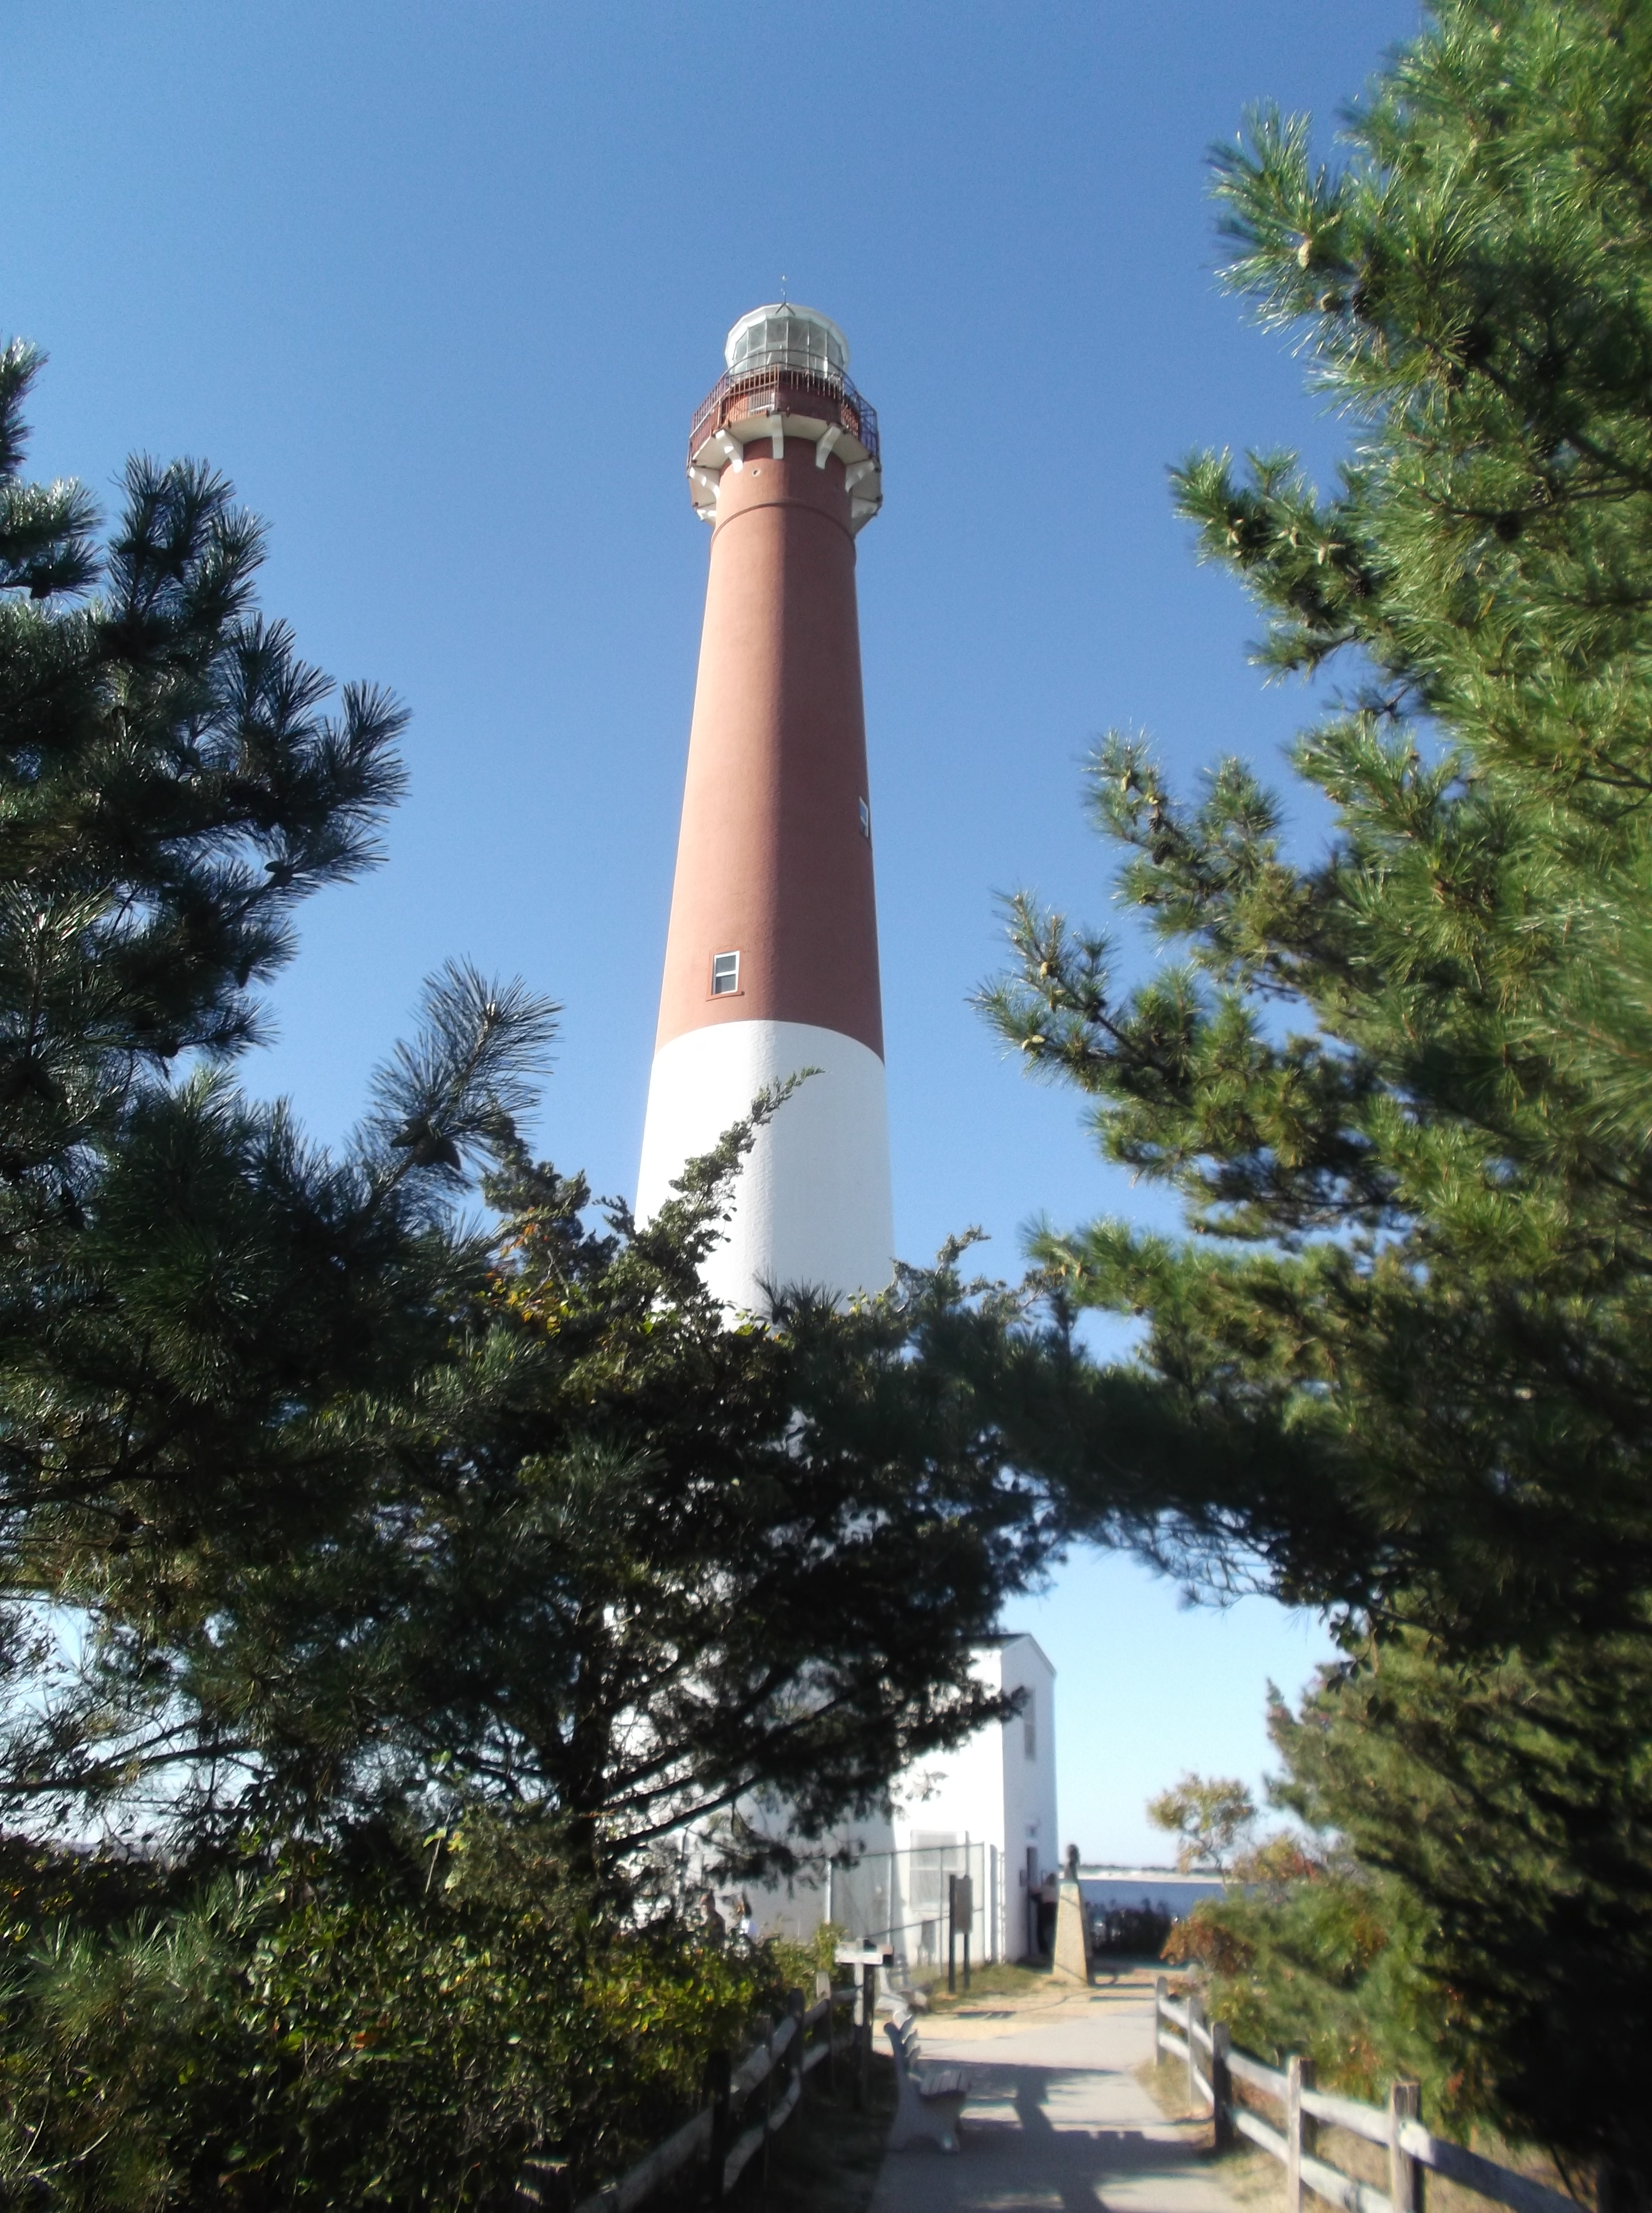 My tripTo Barnegat Lighthouse 10/11/15 | Jaycee's Commentaries